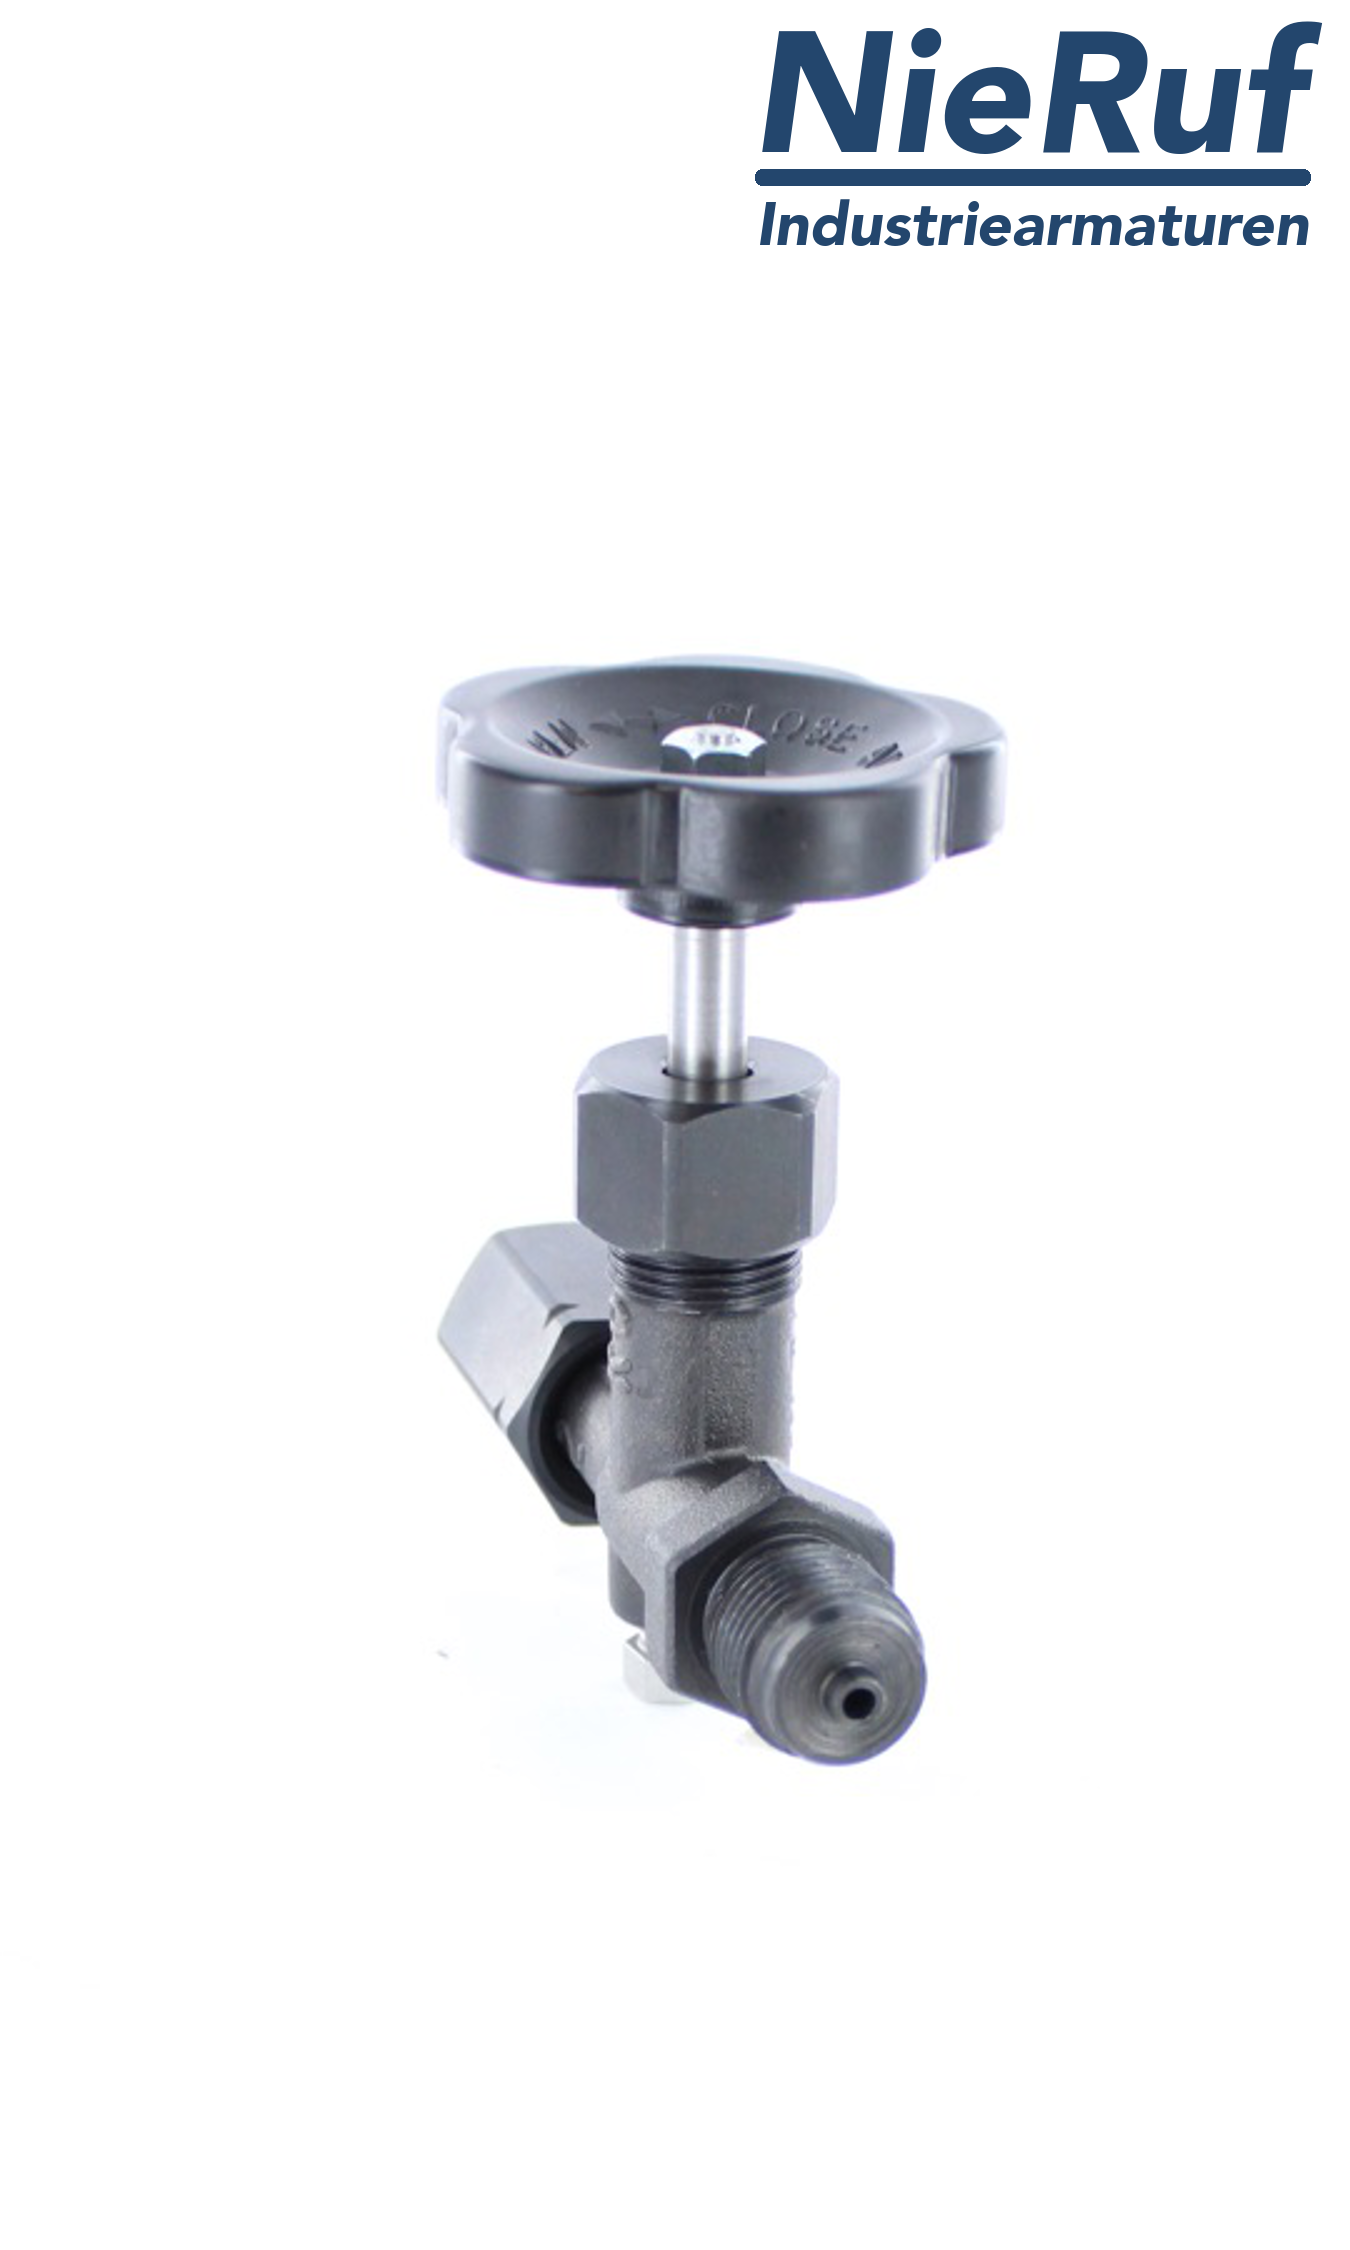 manometer gauge valves sleeve x sleeve DIN 16270 steel 1.0460 400 bar